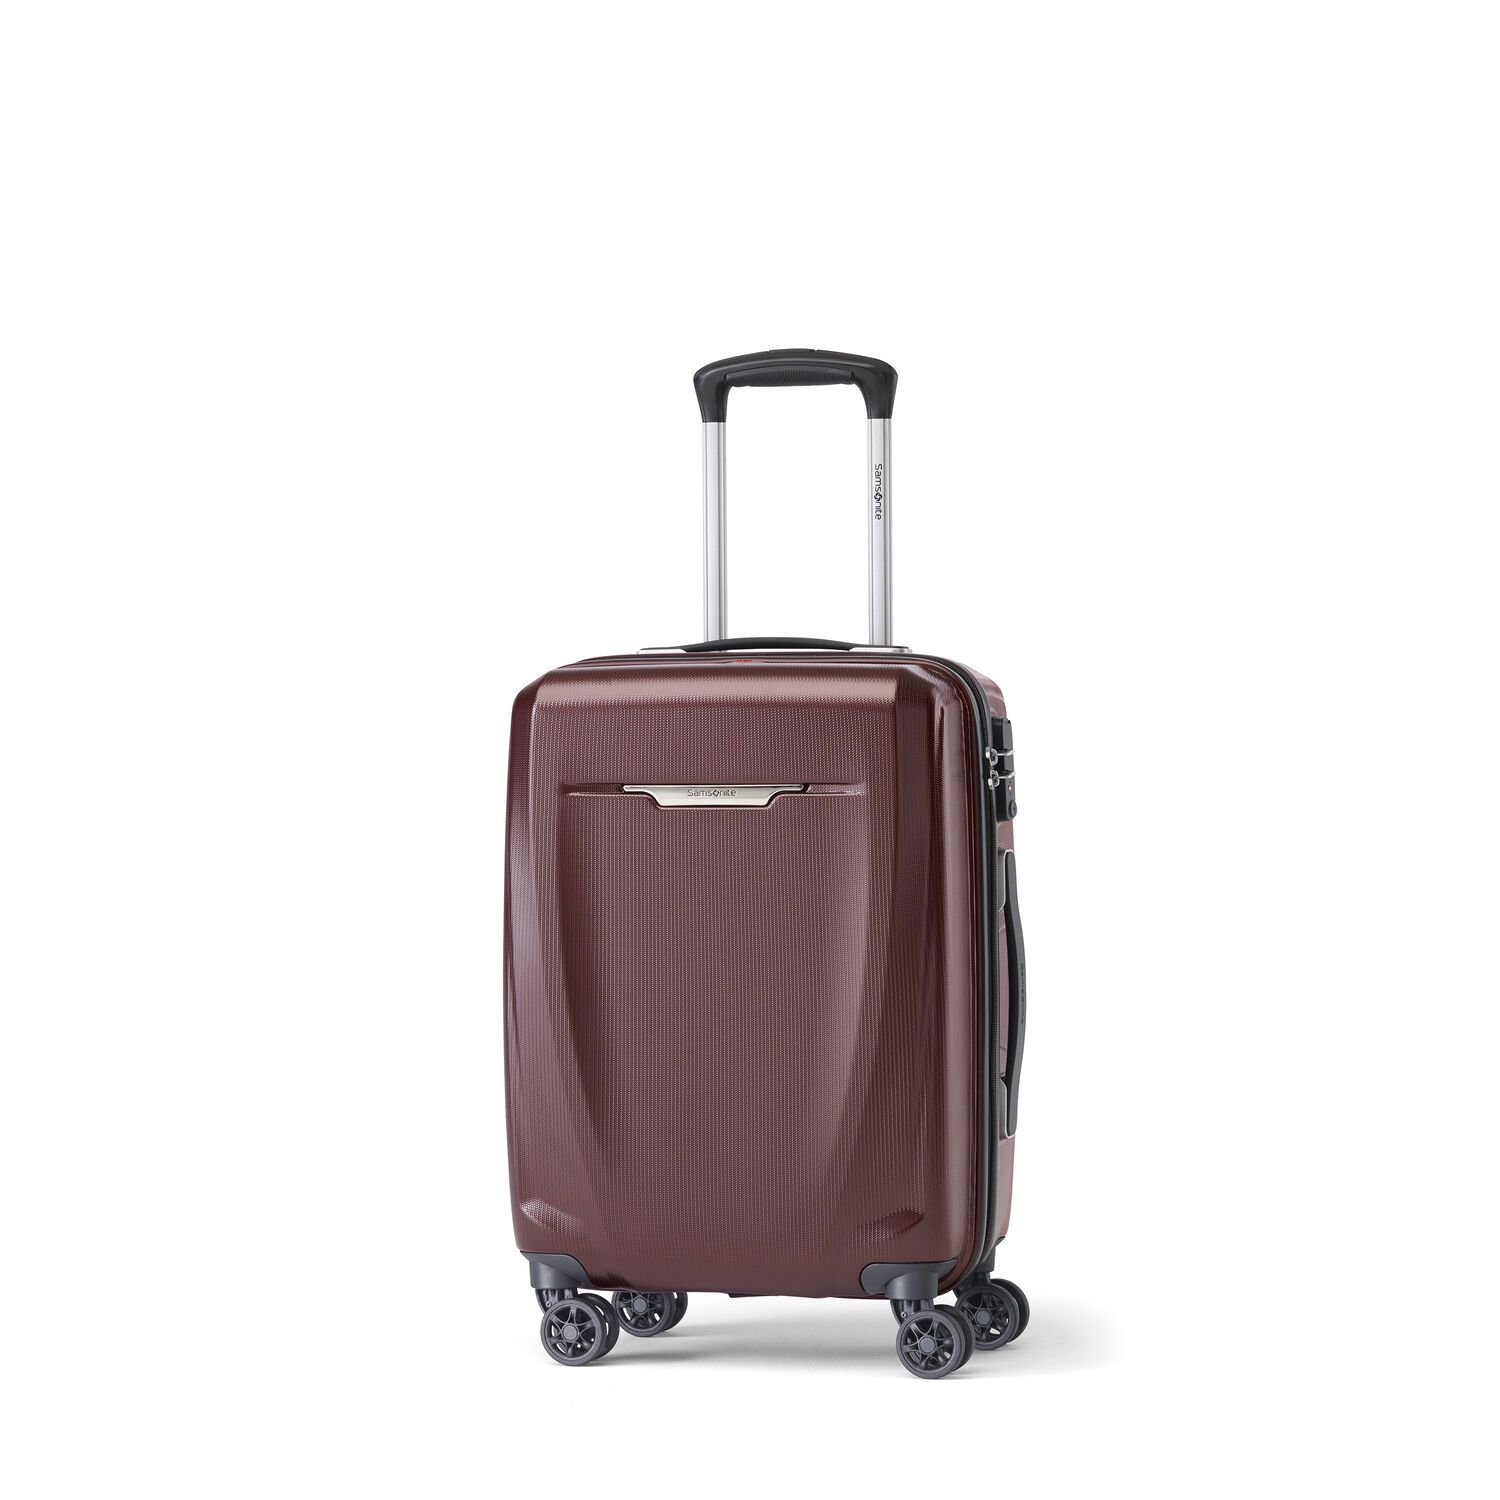 Samsonite Pursuit DLX Plus Spinner Carry-On Luggage - Dark Burgundy